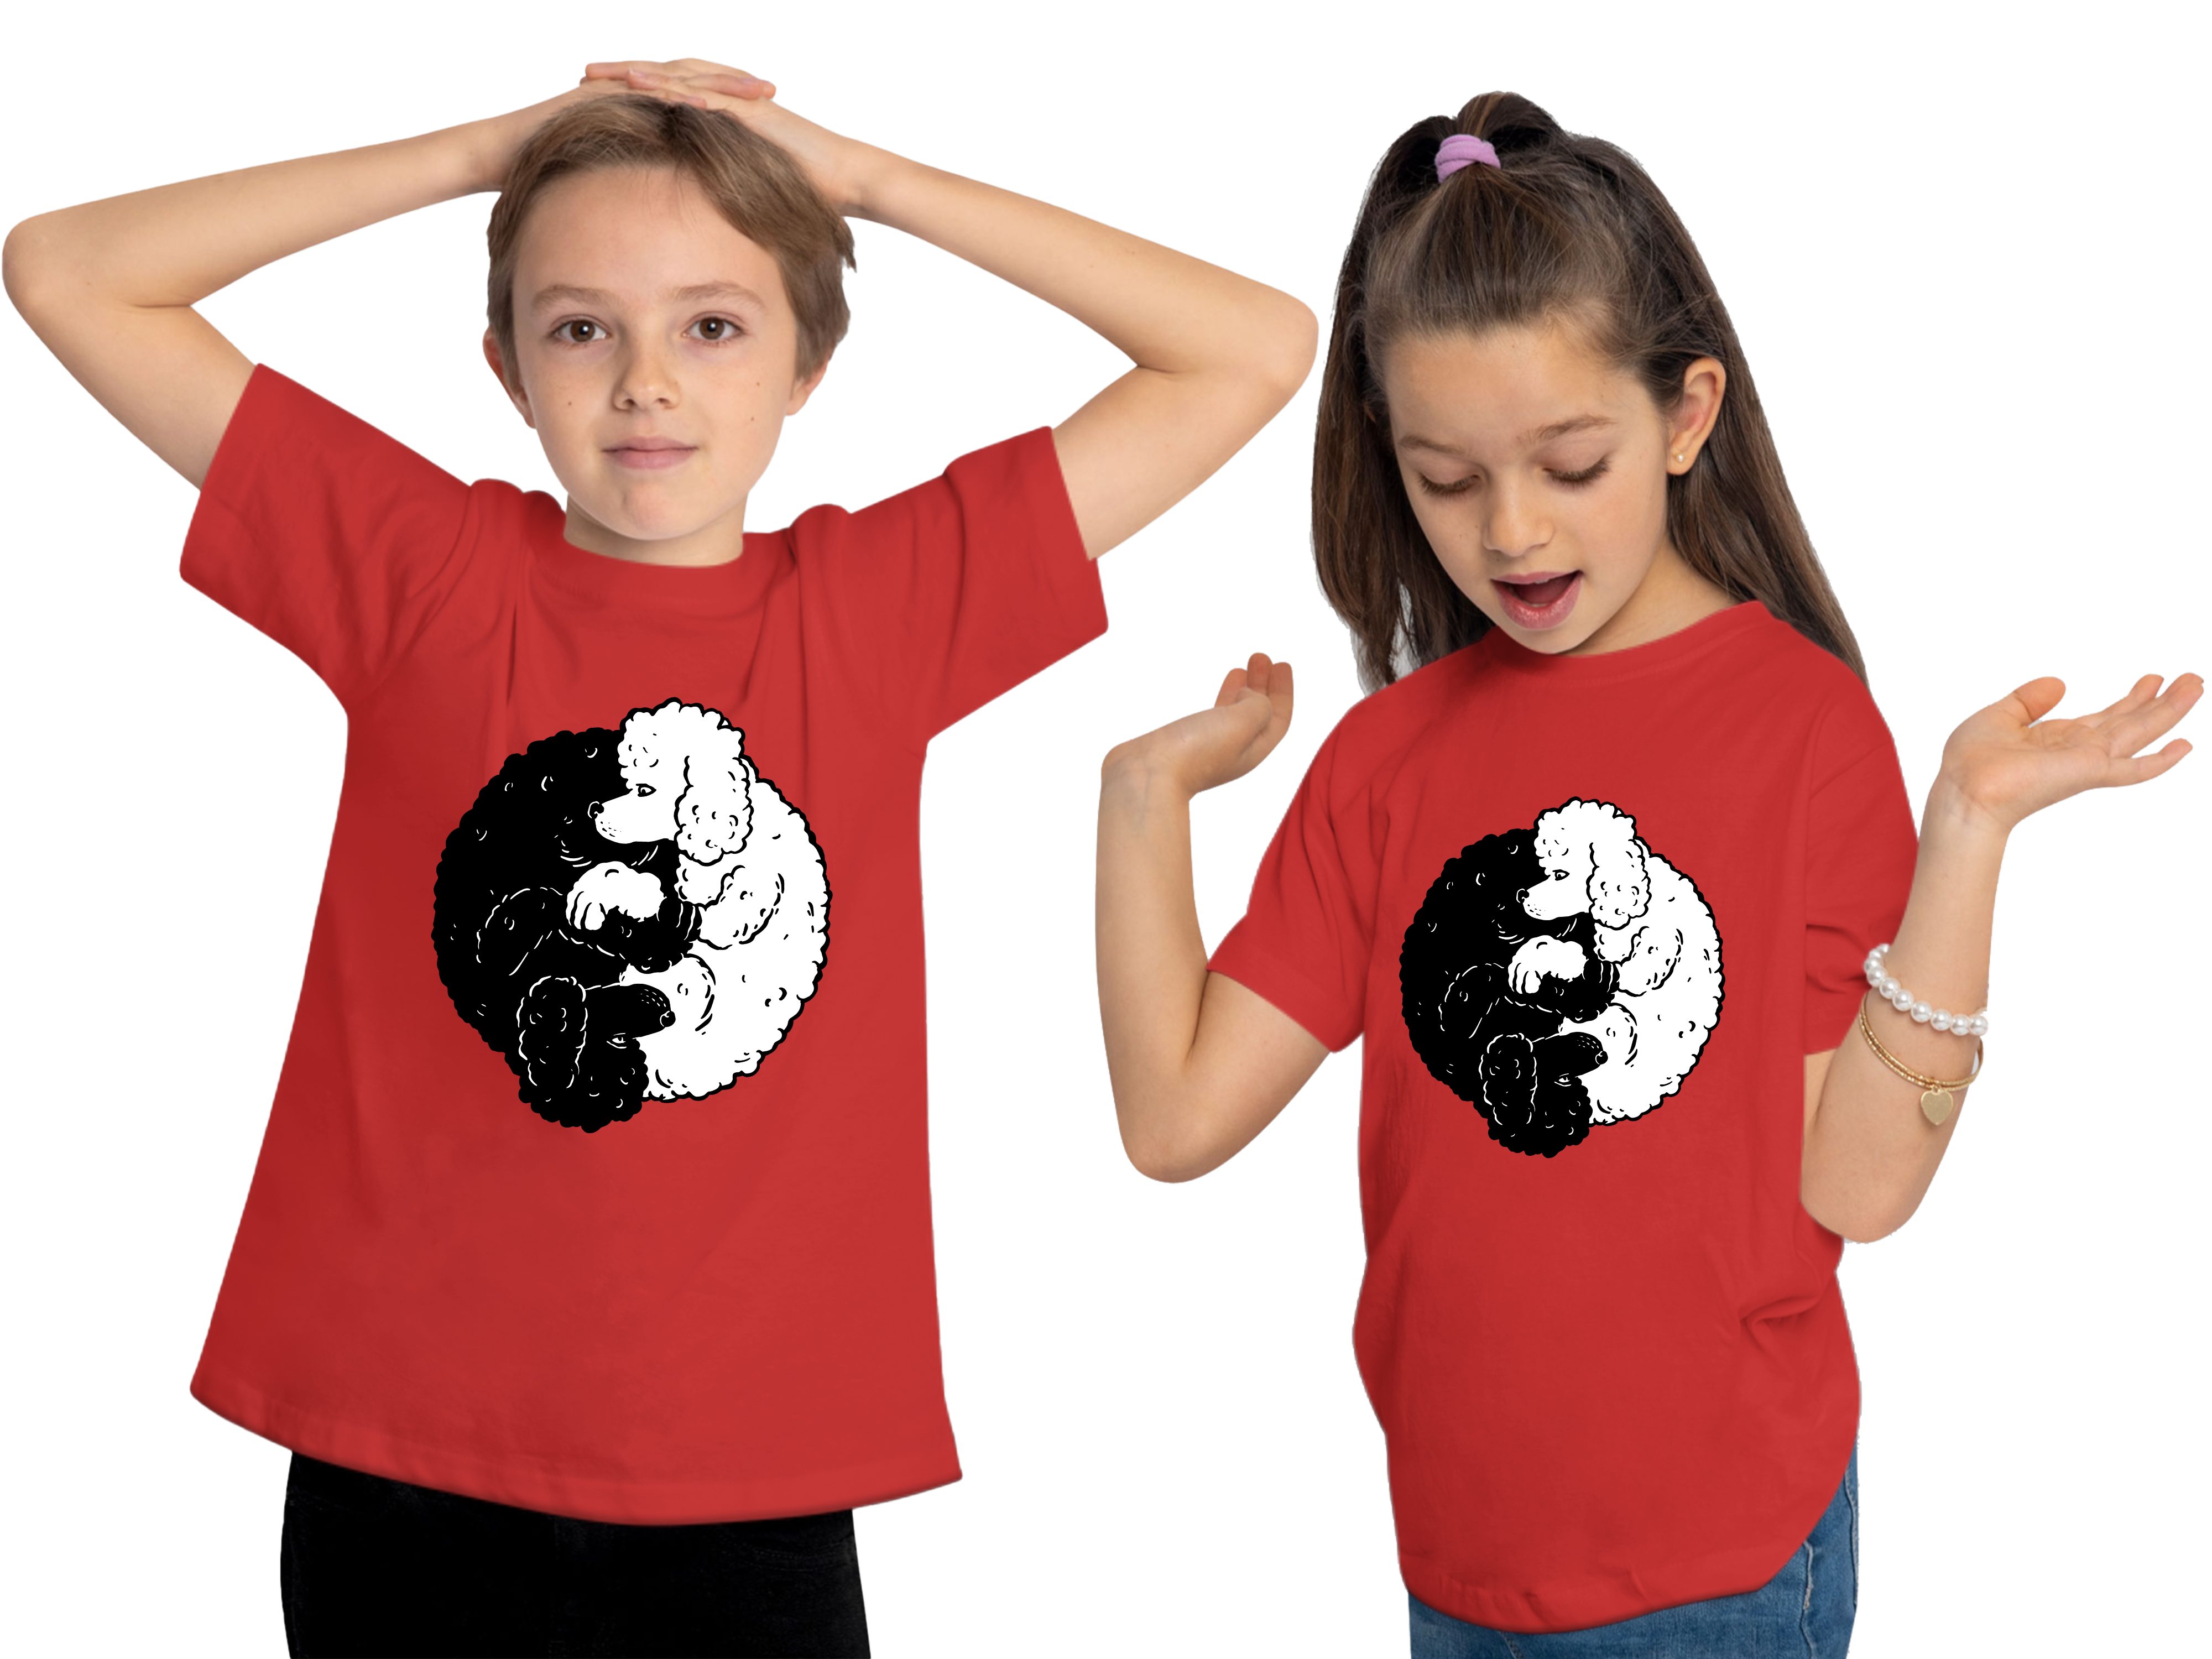 MyDesign24 Print-Shirt Kinder Hunde T-Shirt Yin Yang - Pudel i235 bedruckt Baumwollshirt mit Aufdruck, rot